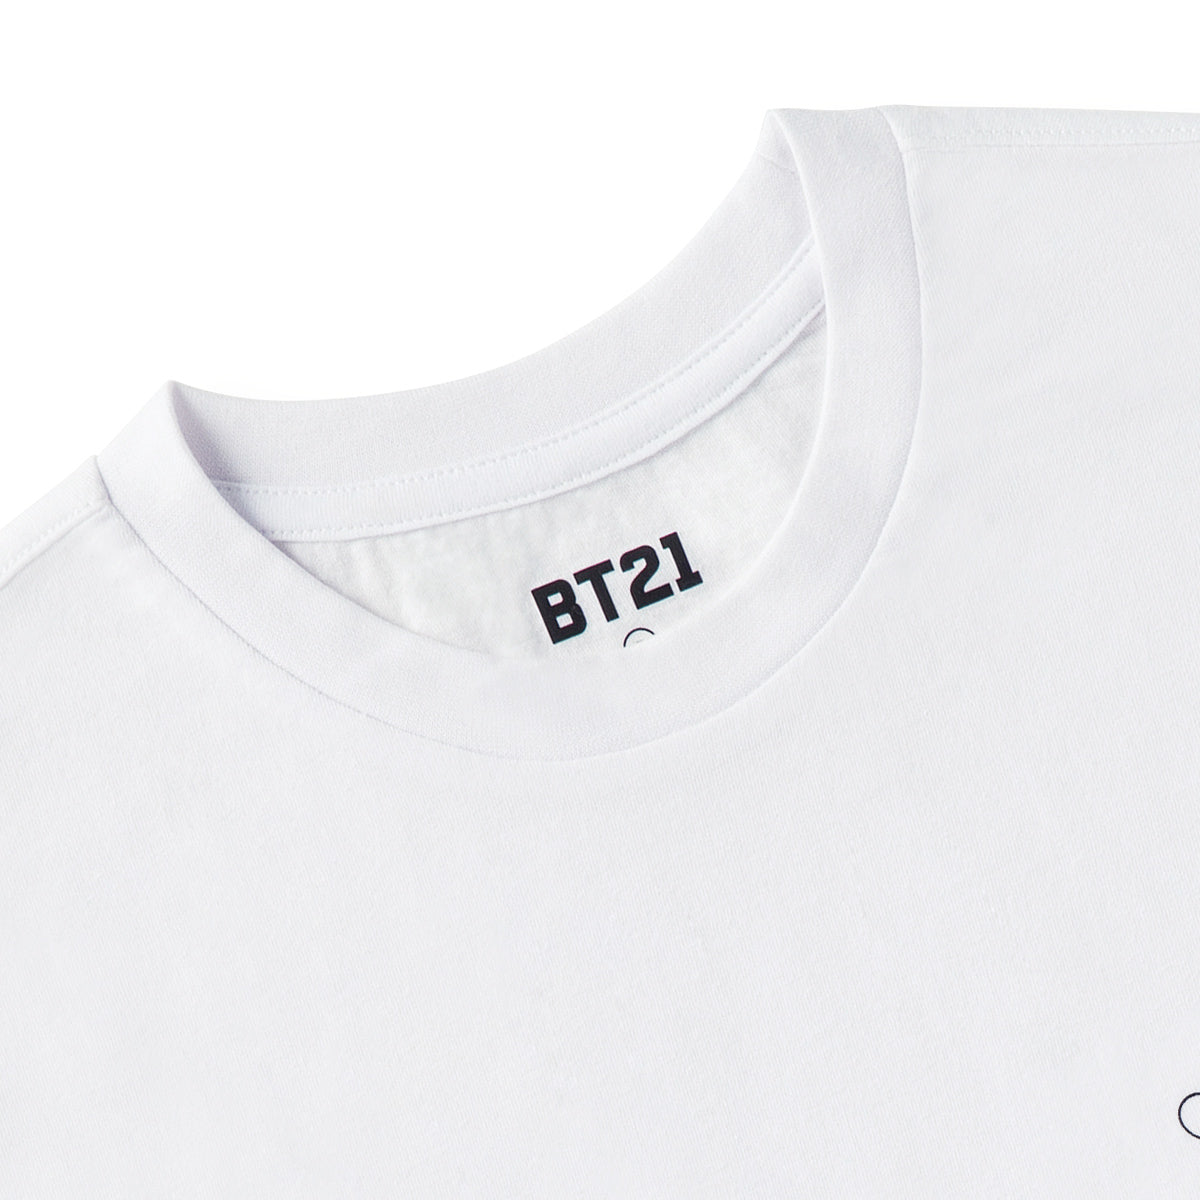 [BT21] Basic T-Shirt Set (Black & White) - Set of 2